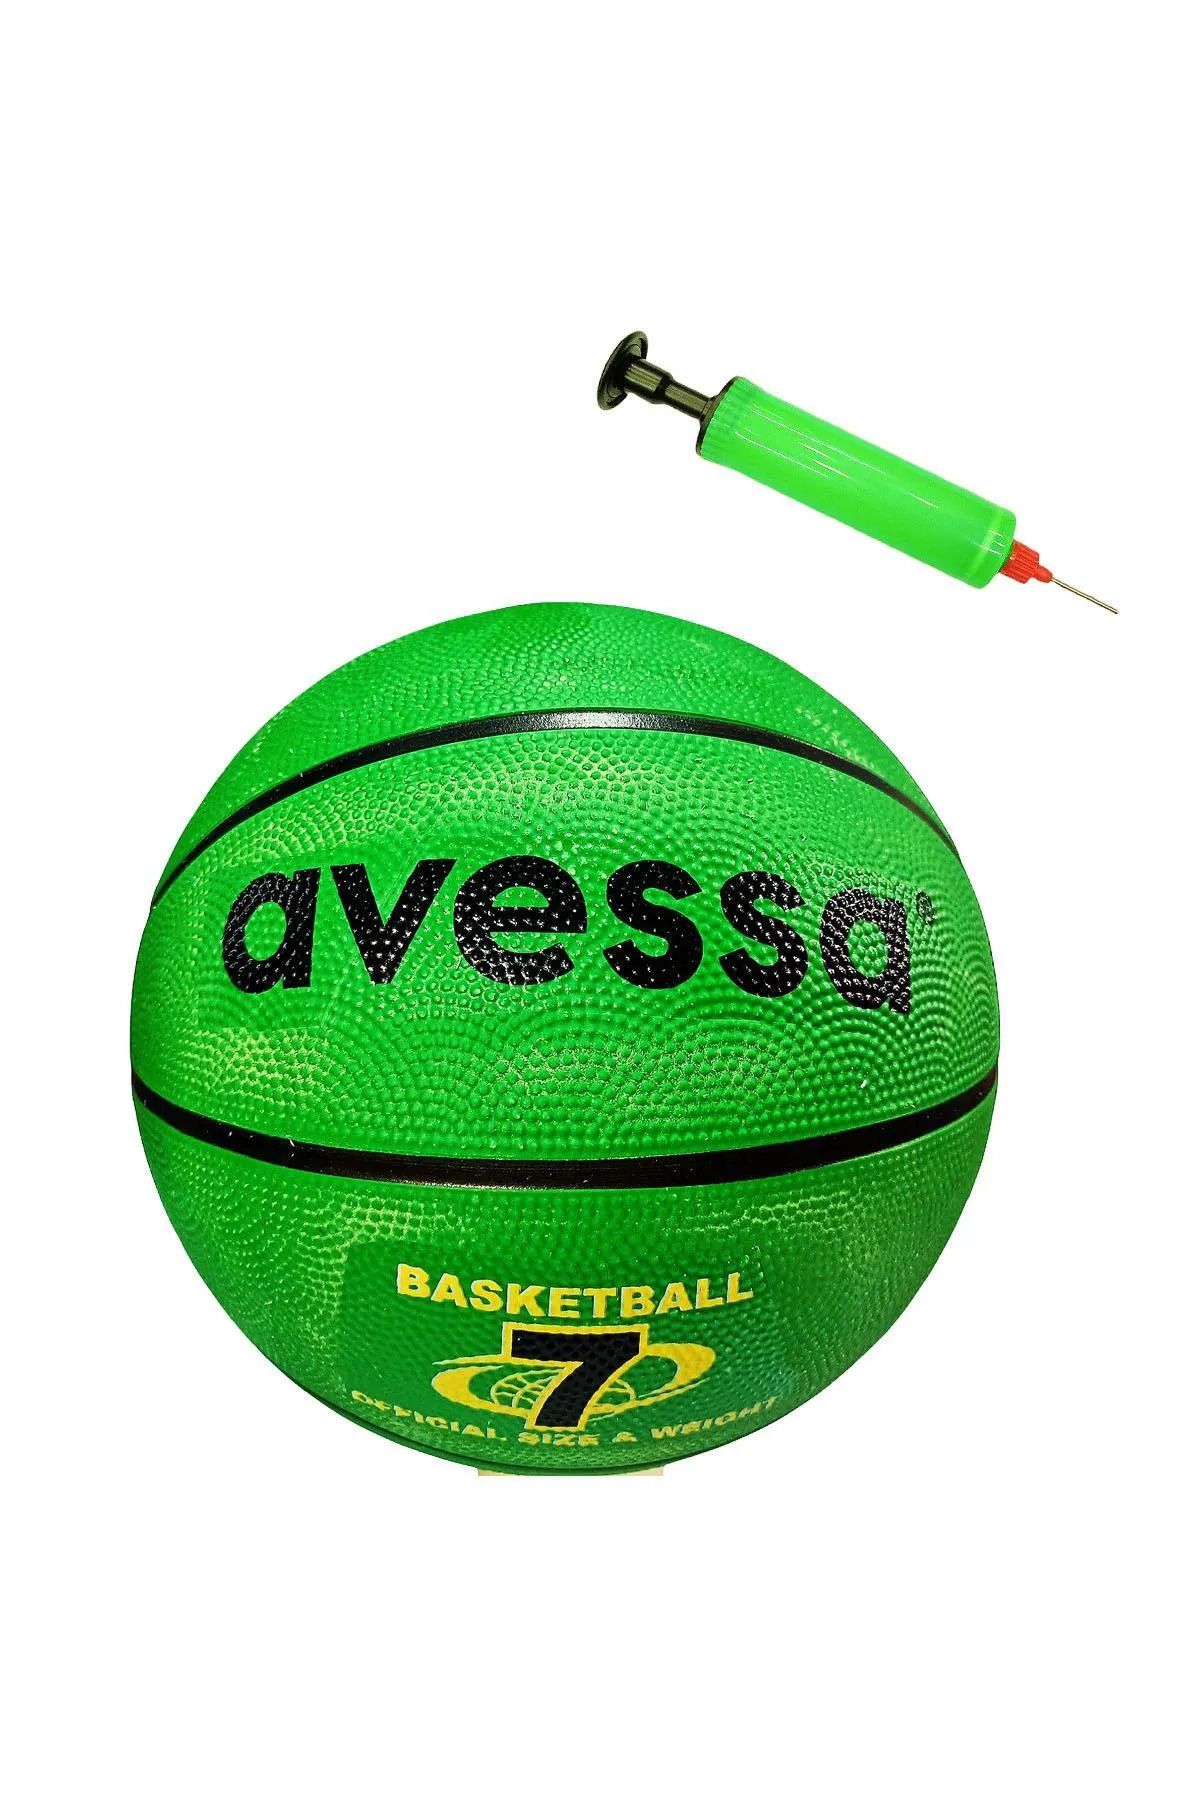 TOCSPORTS Yeşil Basketbol Topu - No 7 - 520-550 Gram - Pompa Dahil